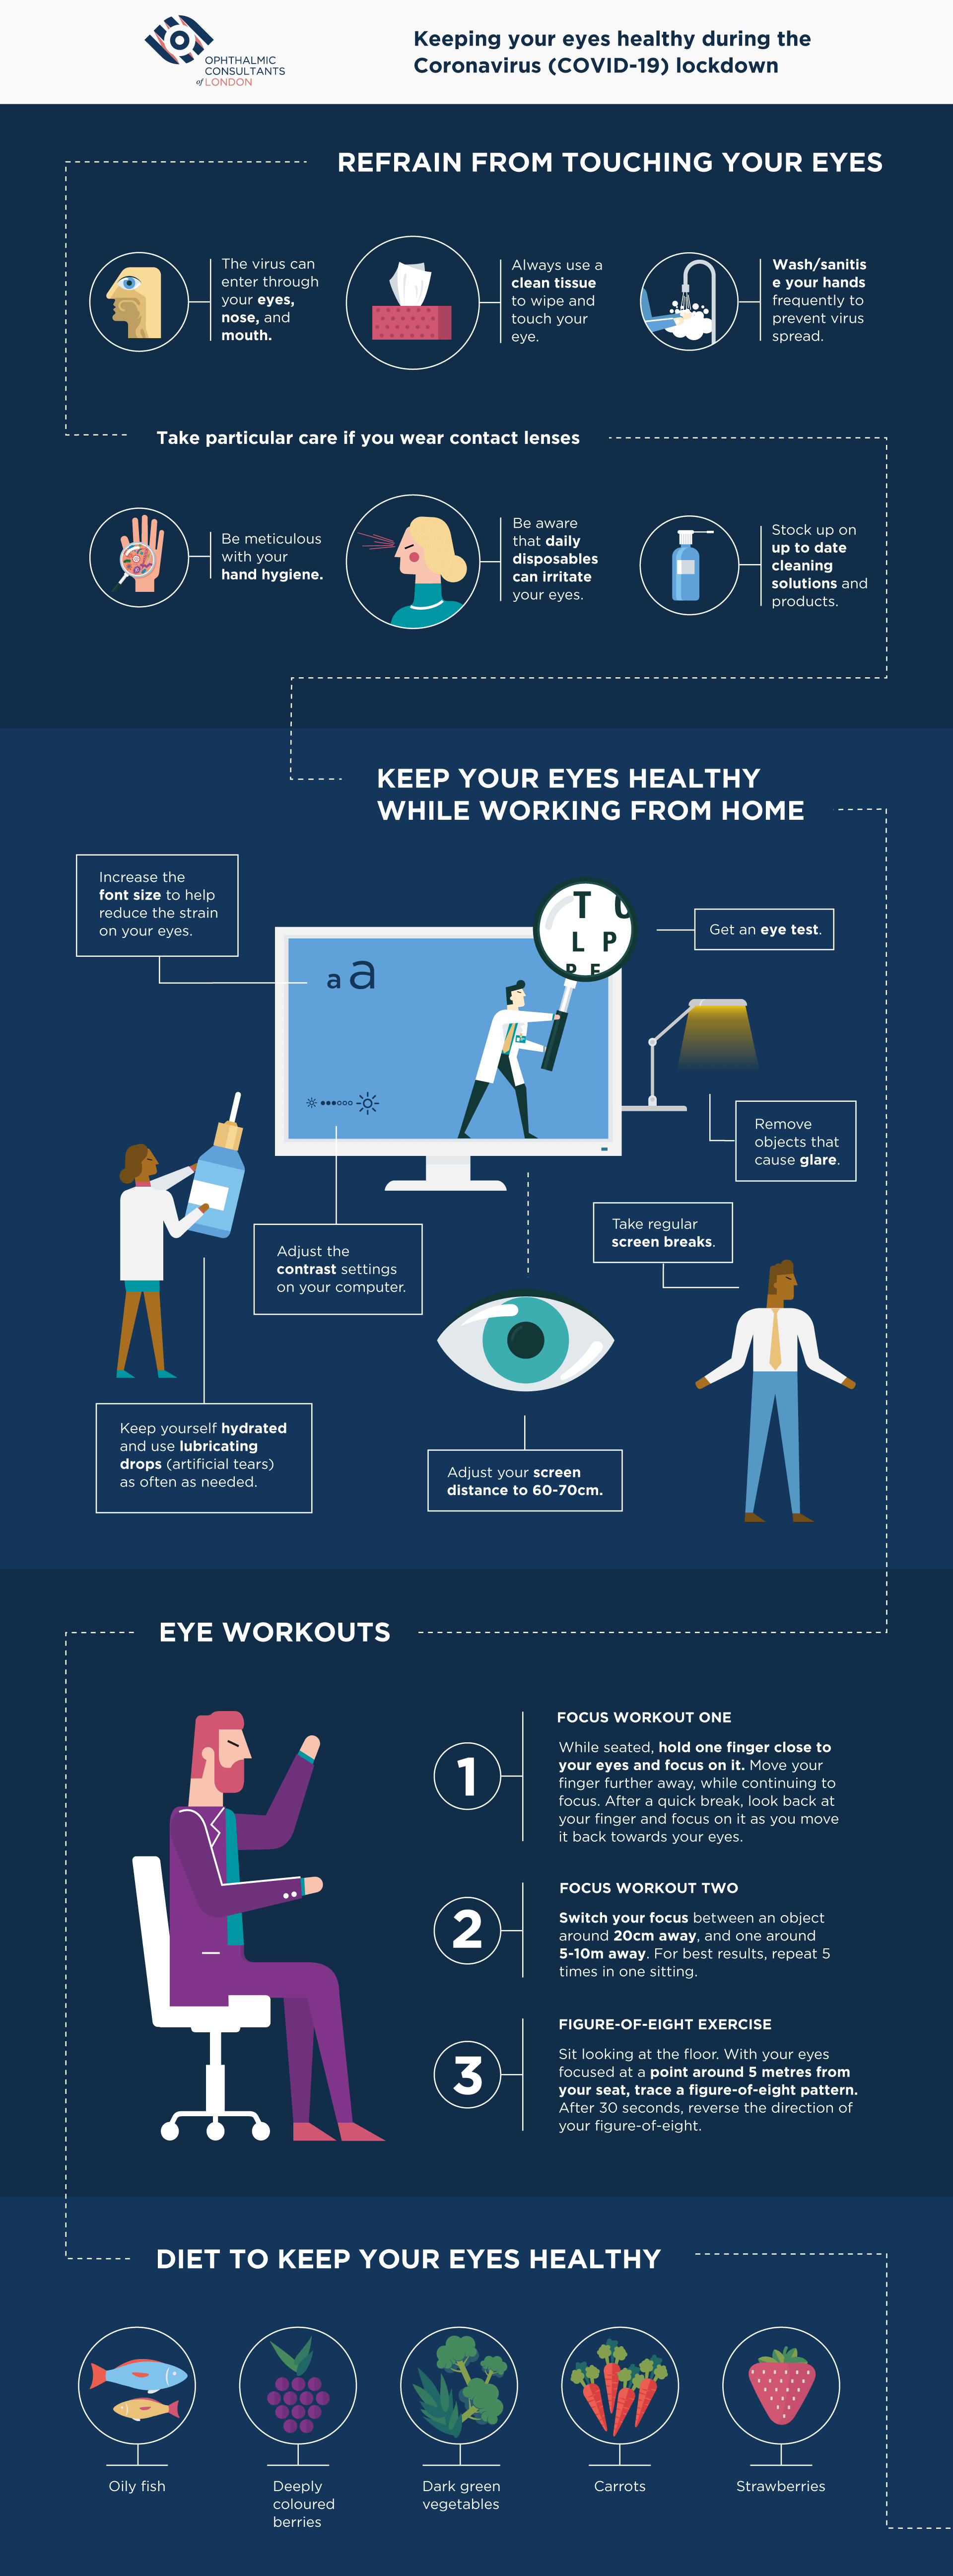 keep eyes healthy during coronavirus lockdown infographic